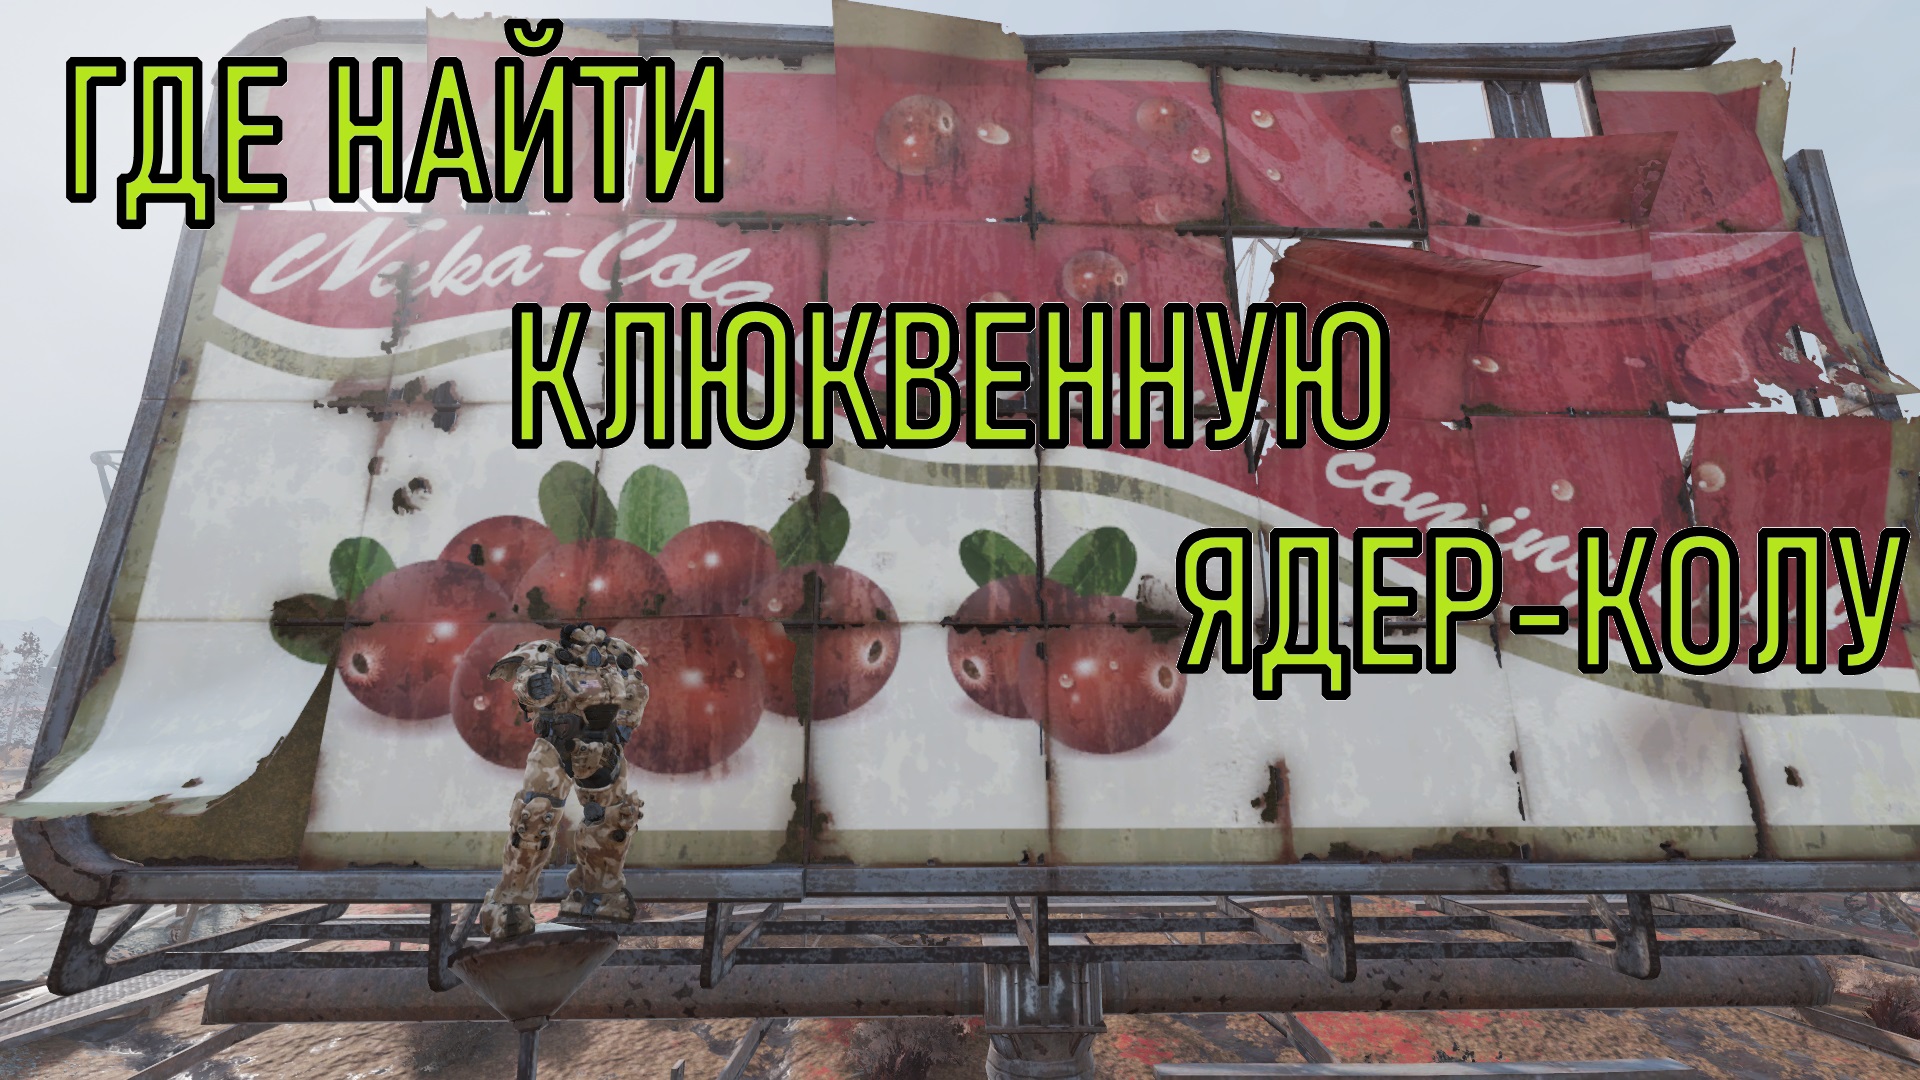 Fallout 76 Где найти клюквенную ядер-колу